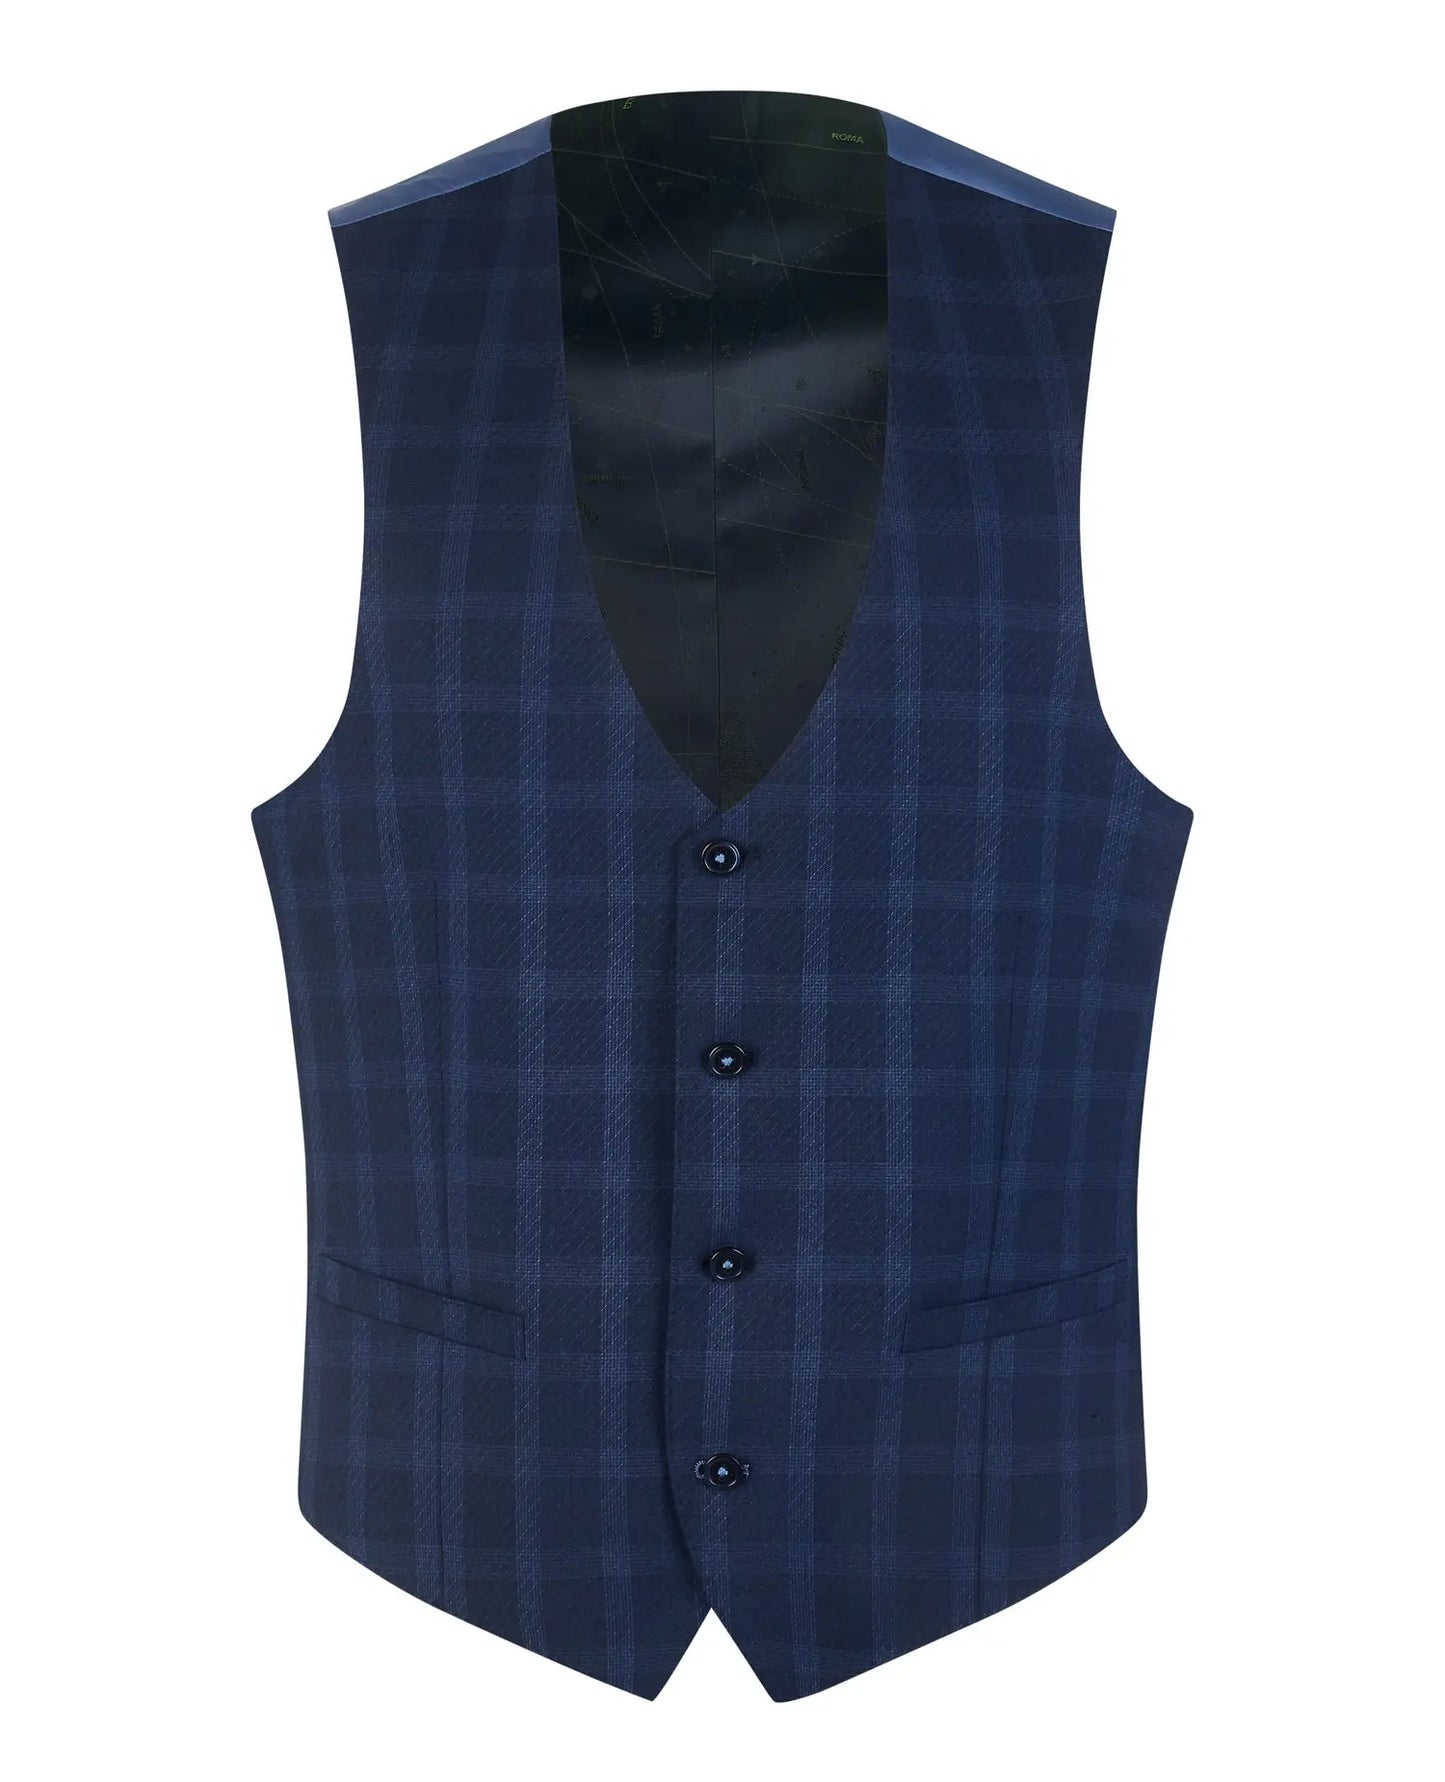 Remus Uomo Lazio Check Suit Waistcoat - Navy / Blue From Woven Durham